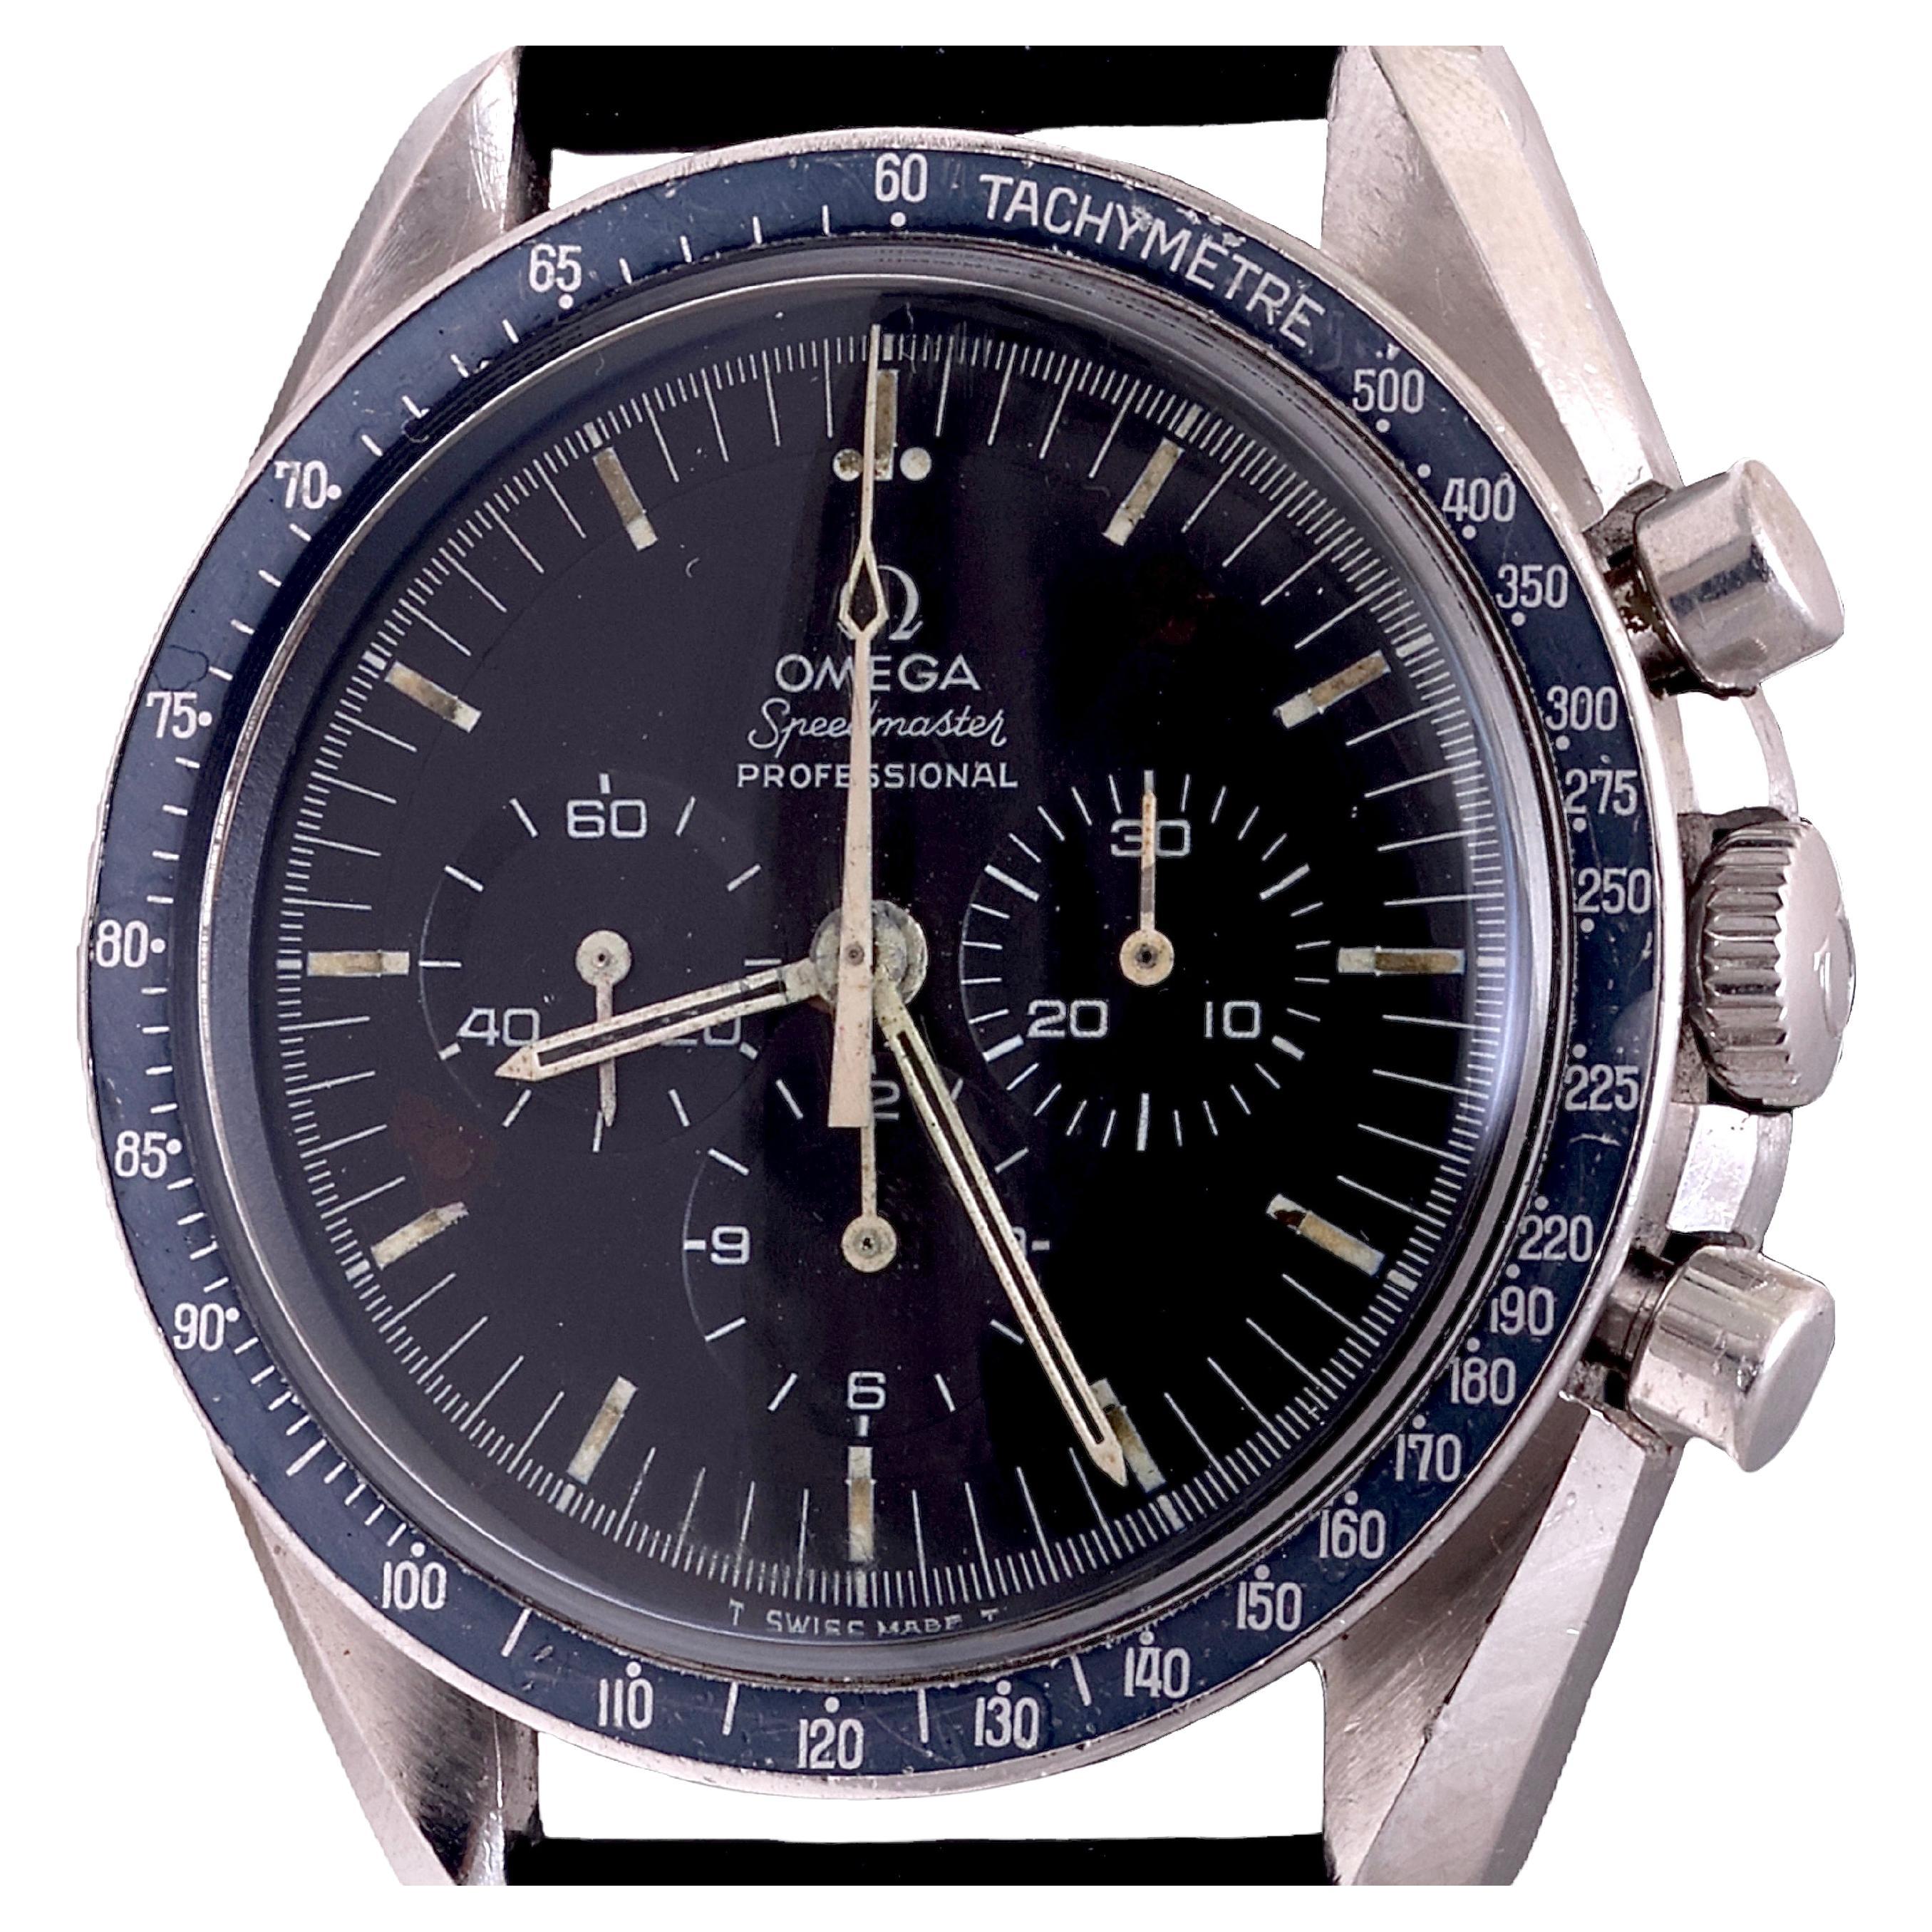 Steel Omega Speedmaster Vintage 1970 's Chronograph Wrist Watch Ref. ST145.022 For Sale